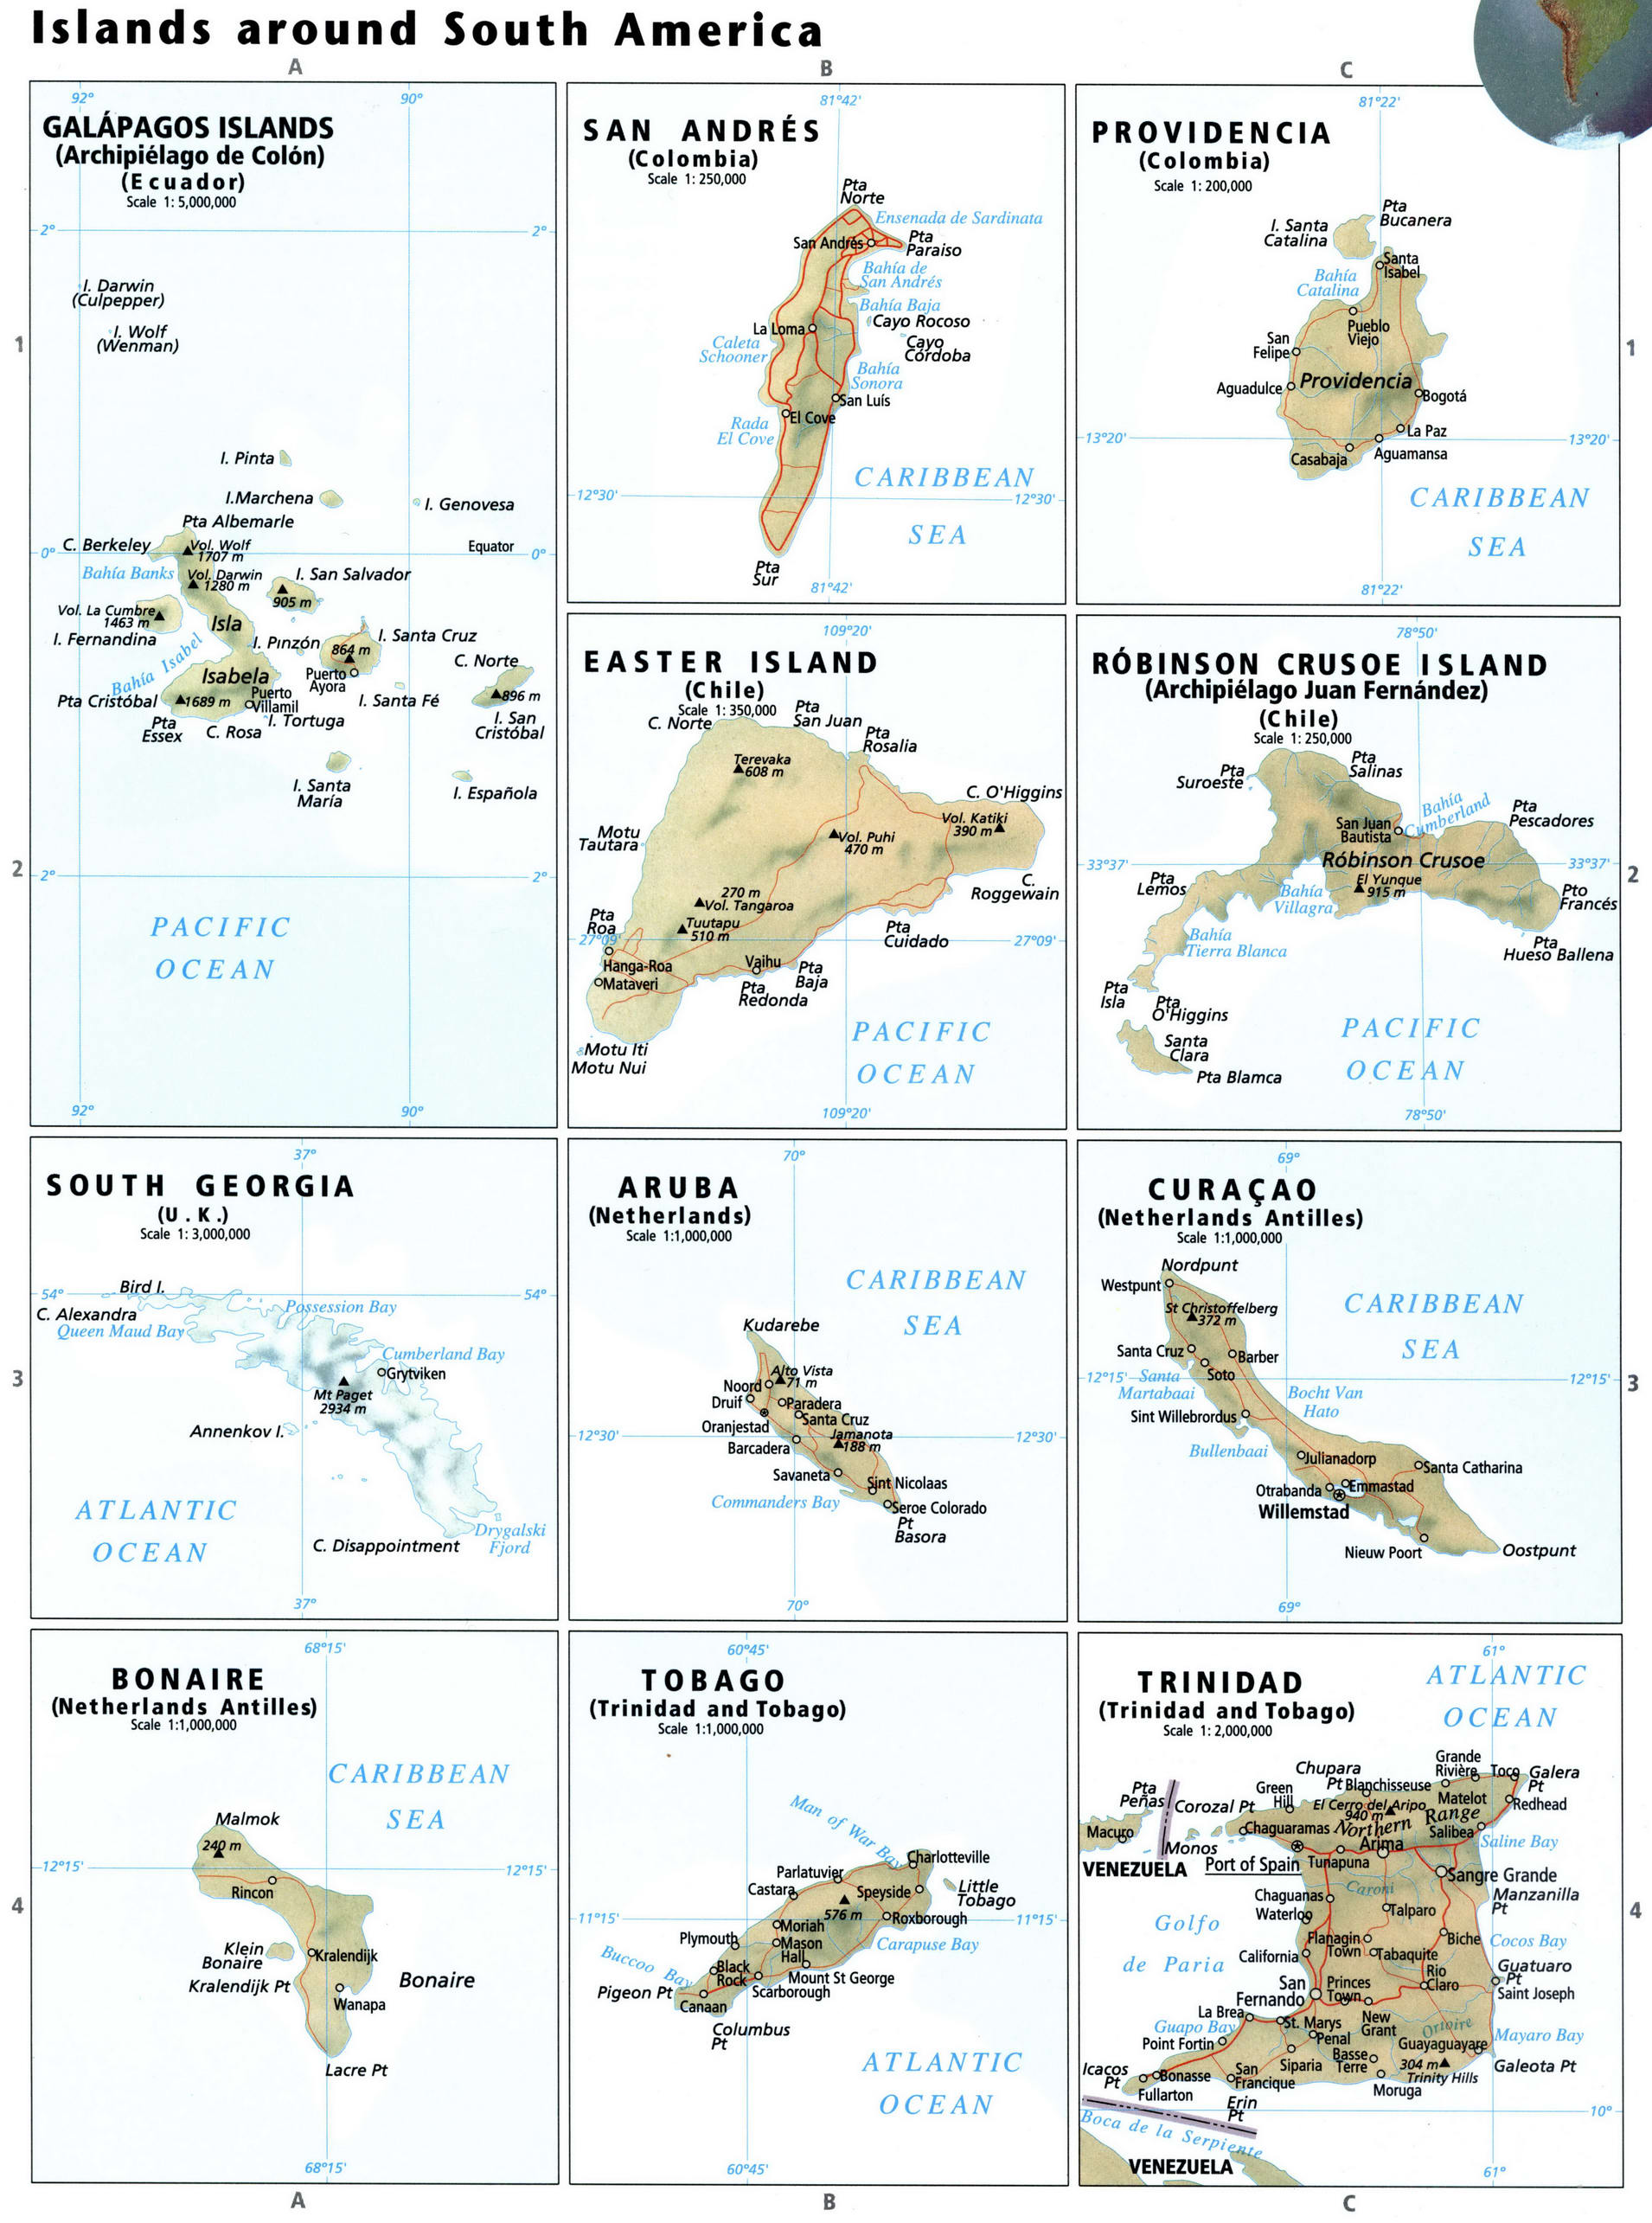 Islands around South America map